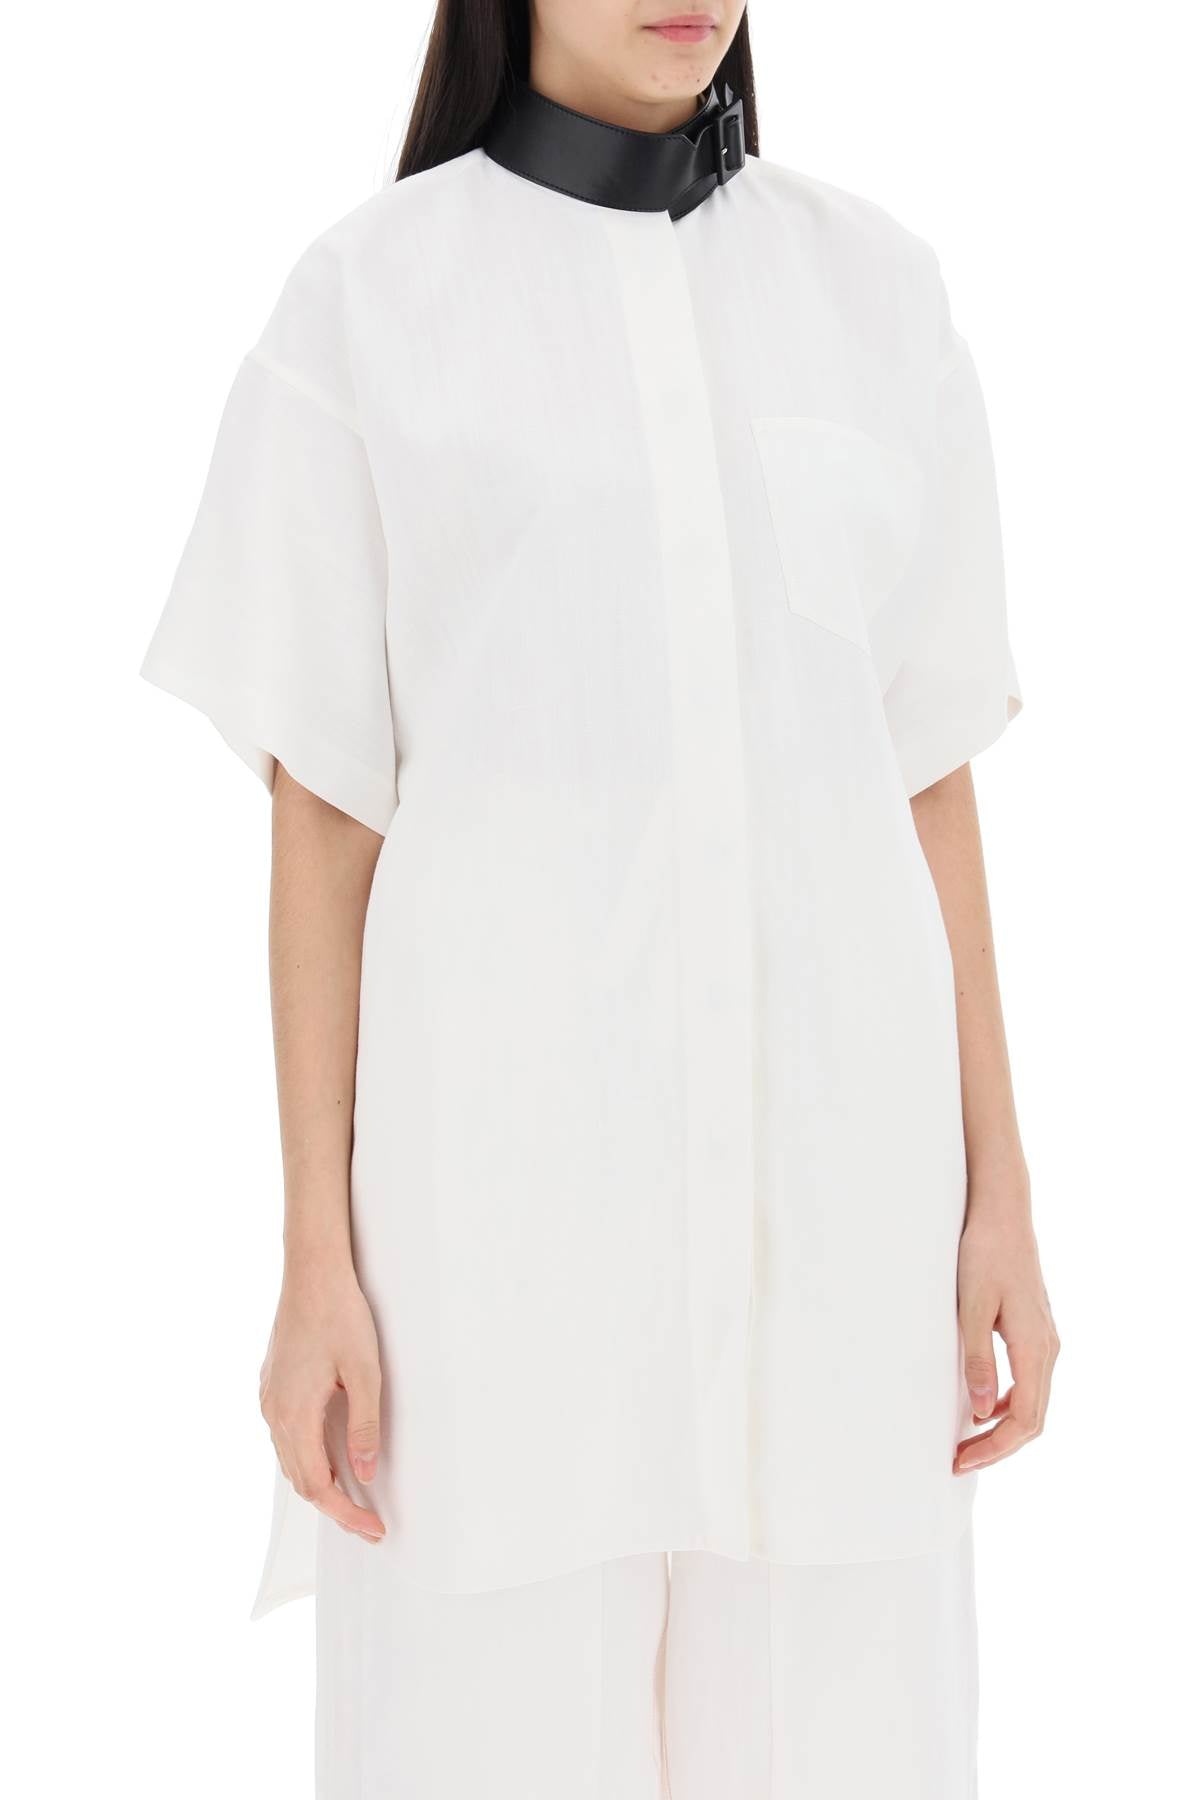 Shop Ferragamo Women's Leather Buckle Chemisier Dress In White For Ss24